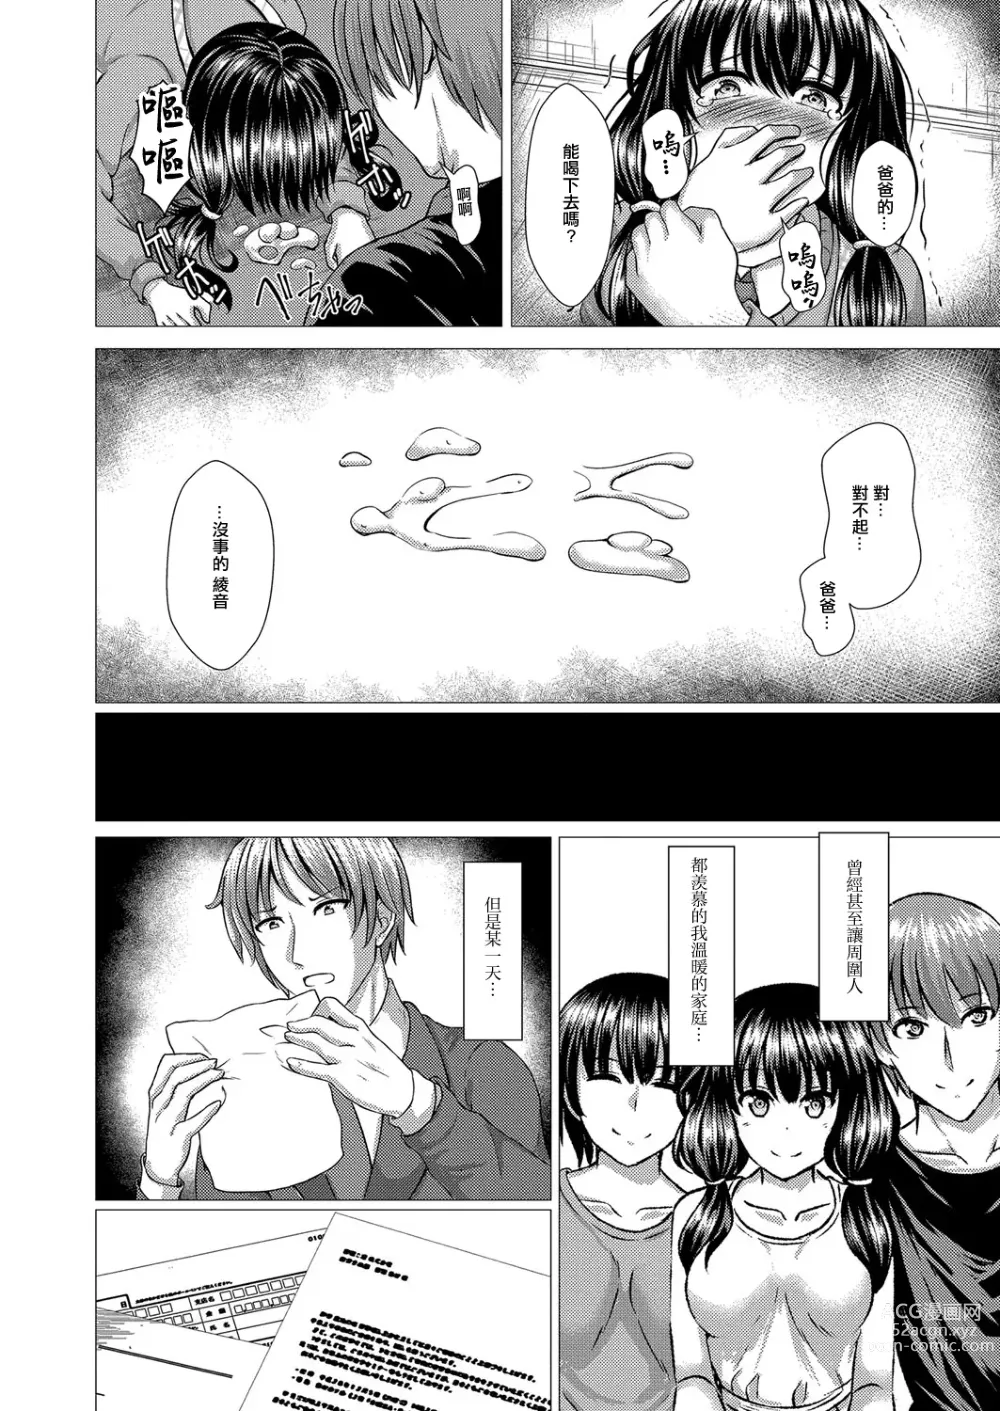 Page 6 of manga Kinshinjyoai